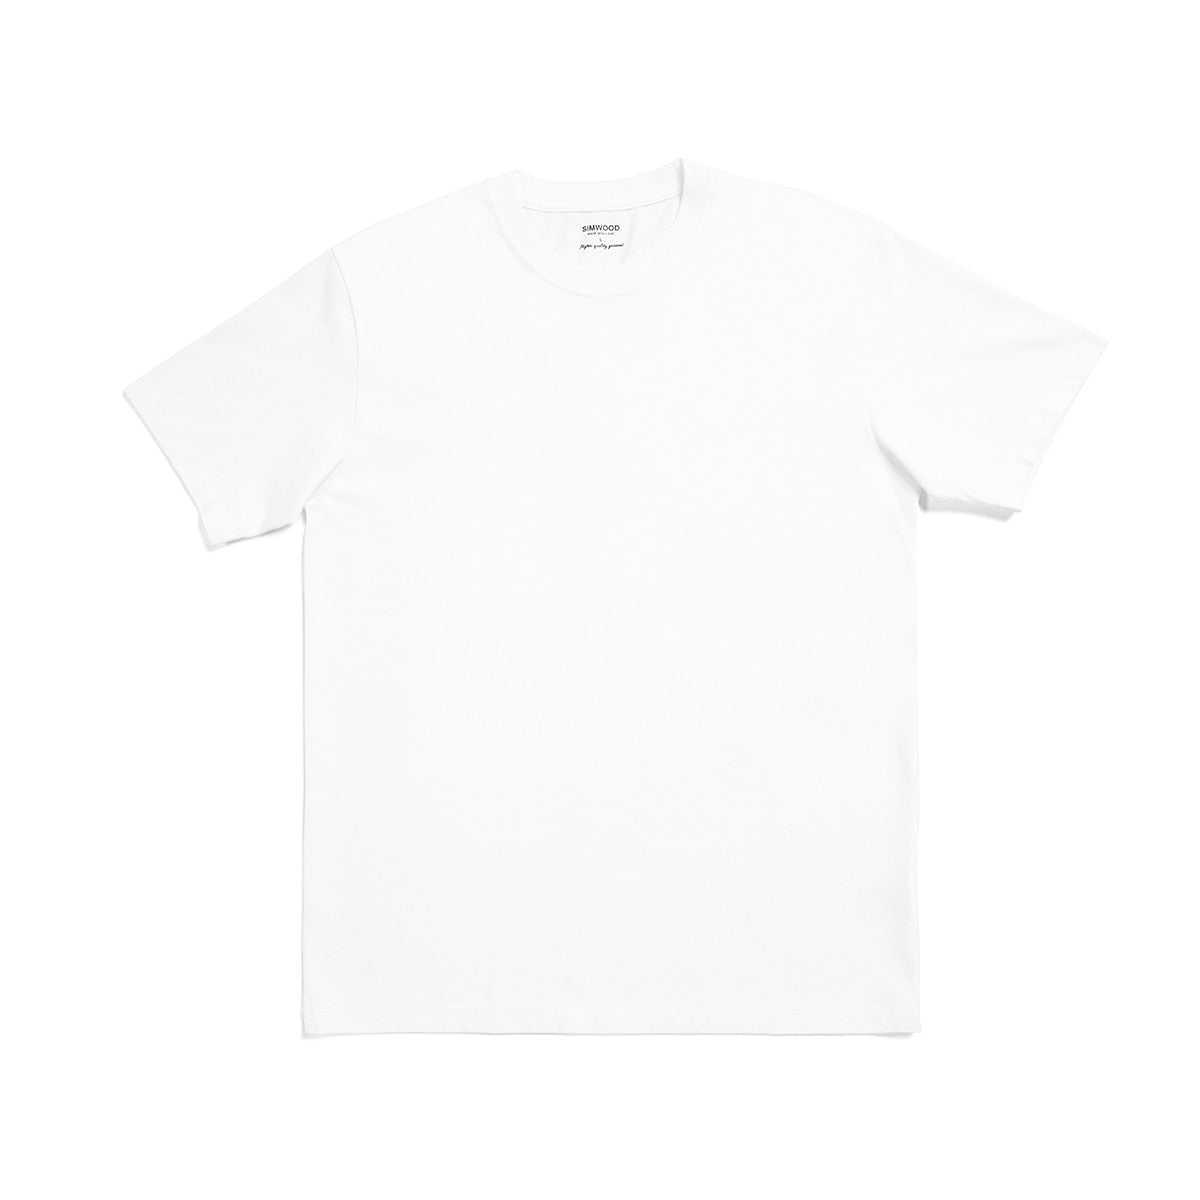 100% Cotton White Solid T Shirt Men Causal O-neck Basic T-shirt Male High Quality Classical Tops XL/XXL/XXXL